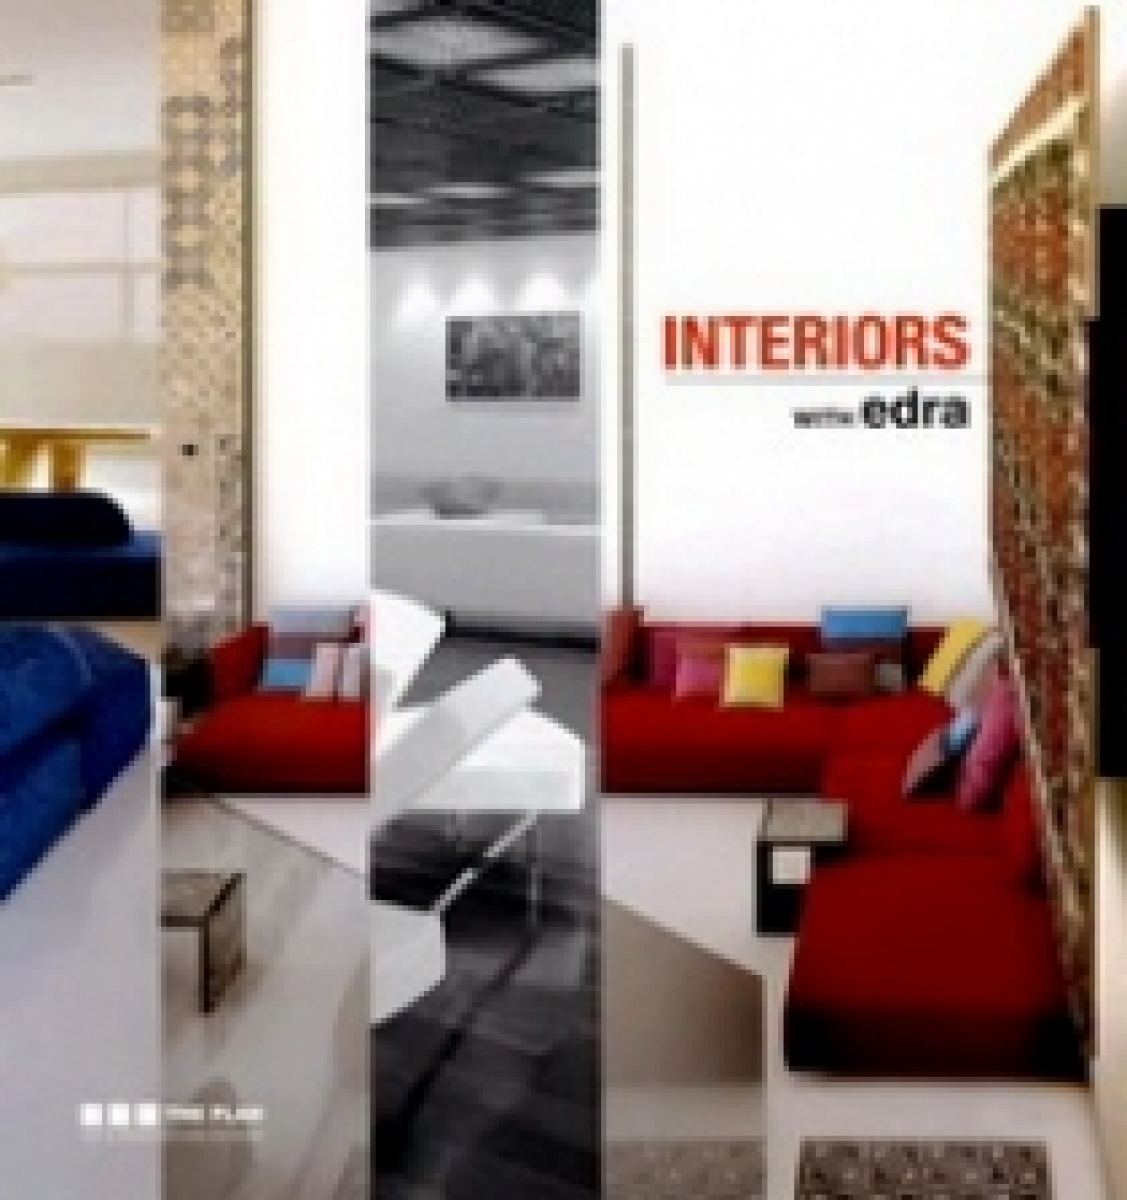 Cristina M. Interiors With Edra 